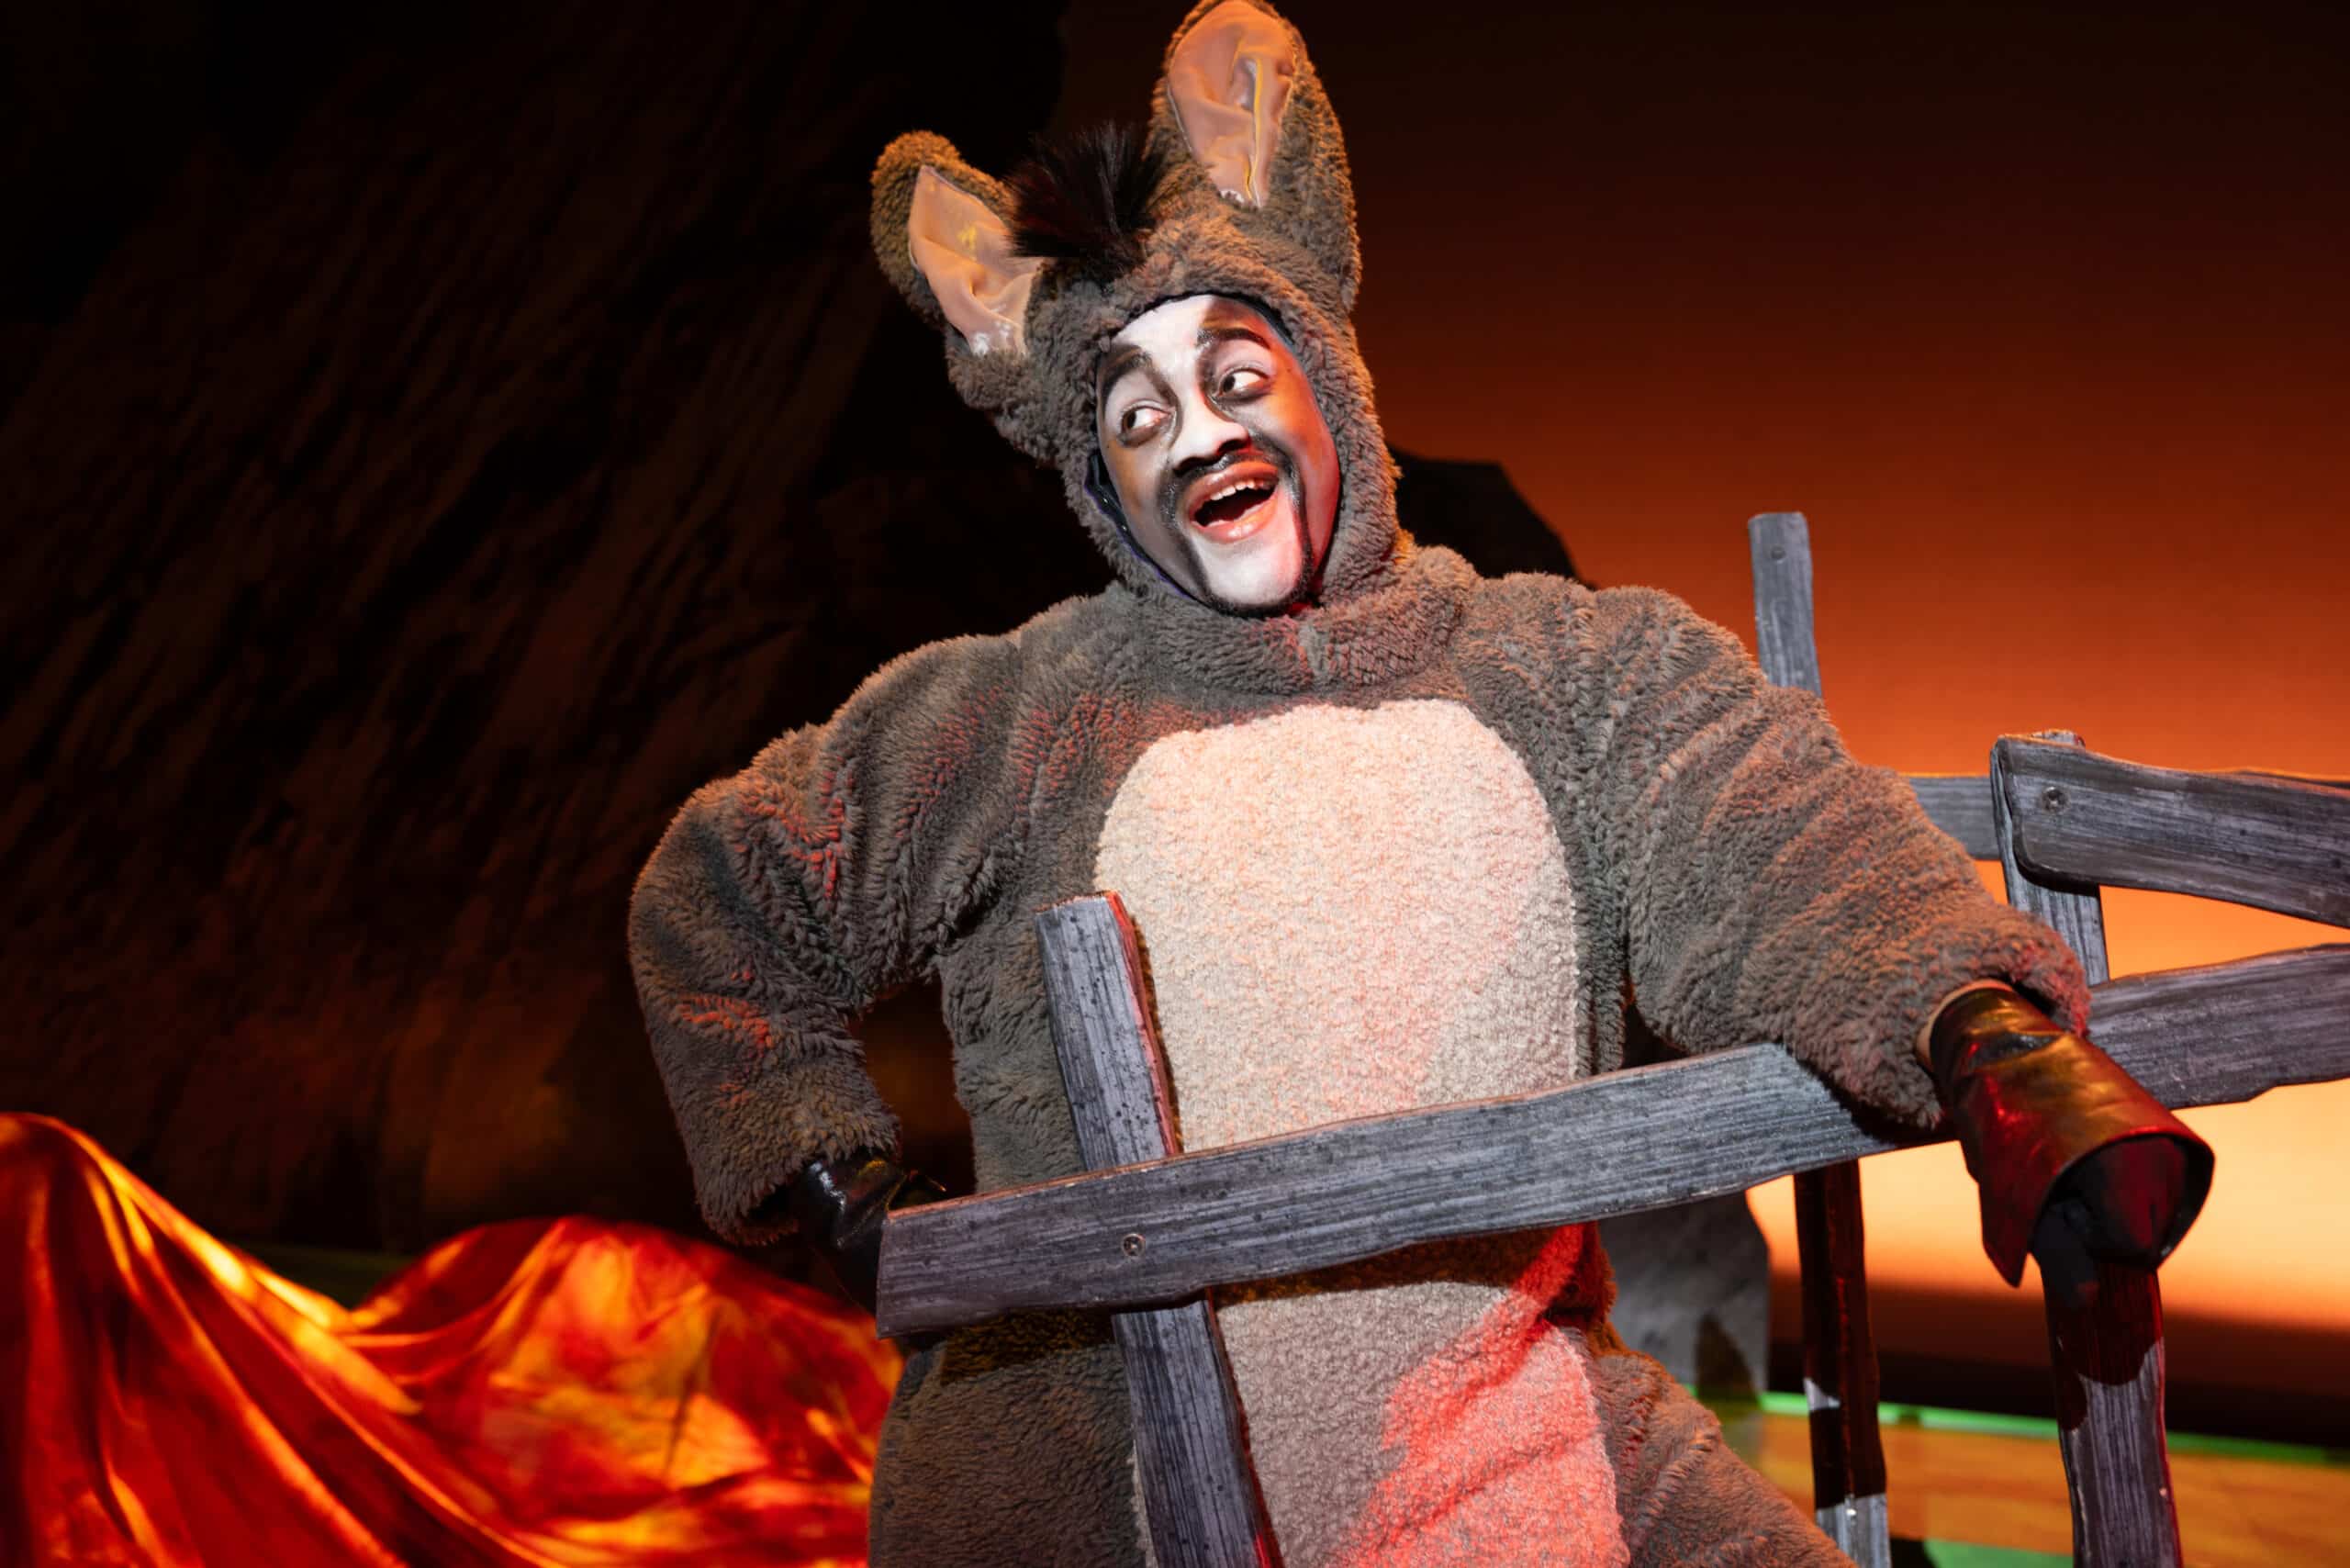 Naphtali Yaakov Curry as Donkey in Shrek The Musical (Credit cyorkphoto)